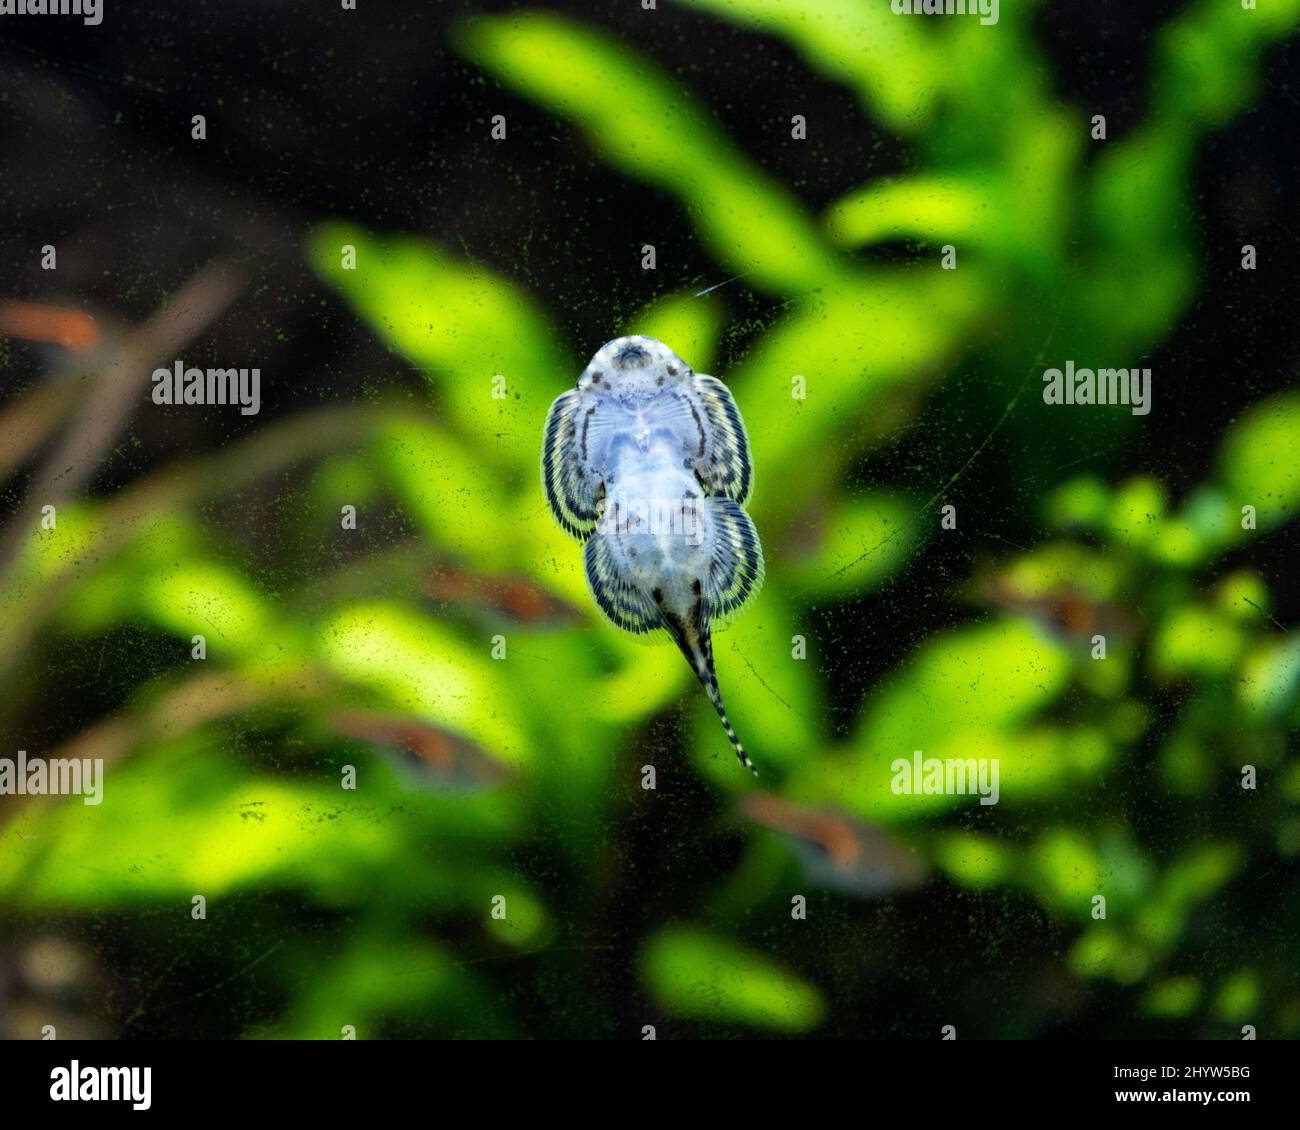 Macro shot of a gastromyzon fish stuck on an aquarium glass Stock Photo